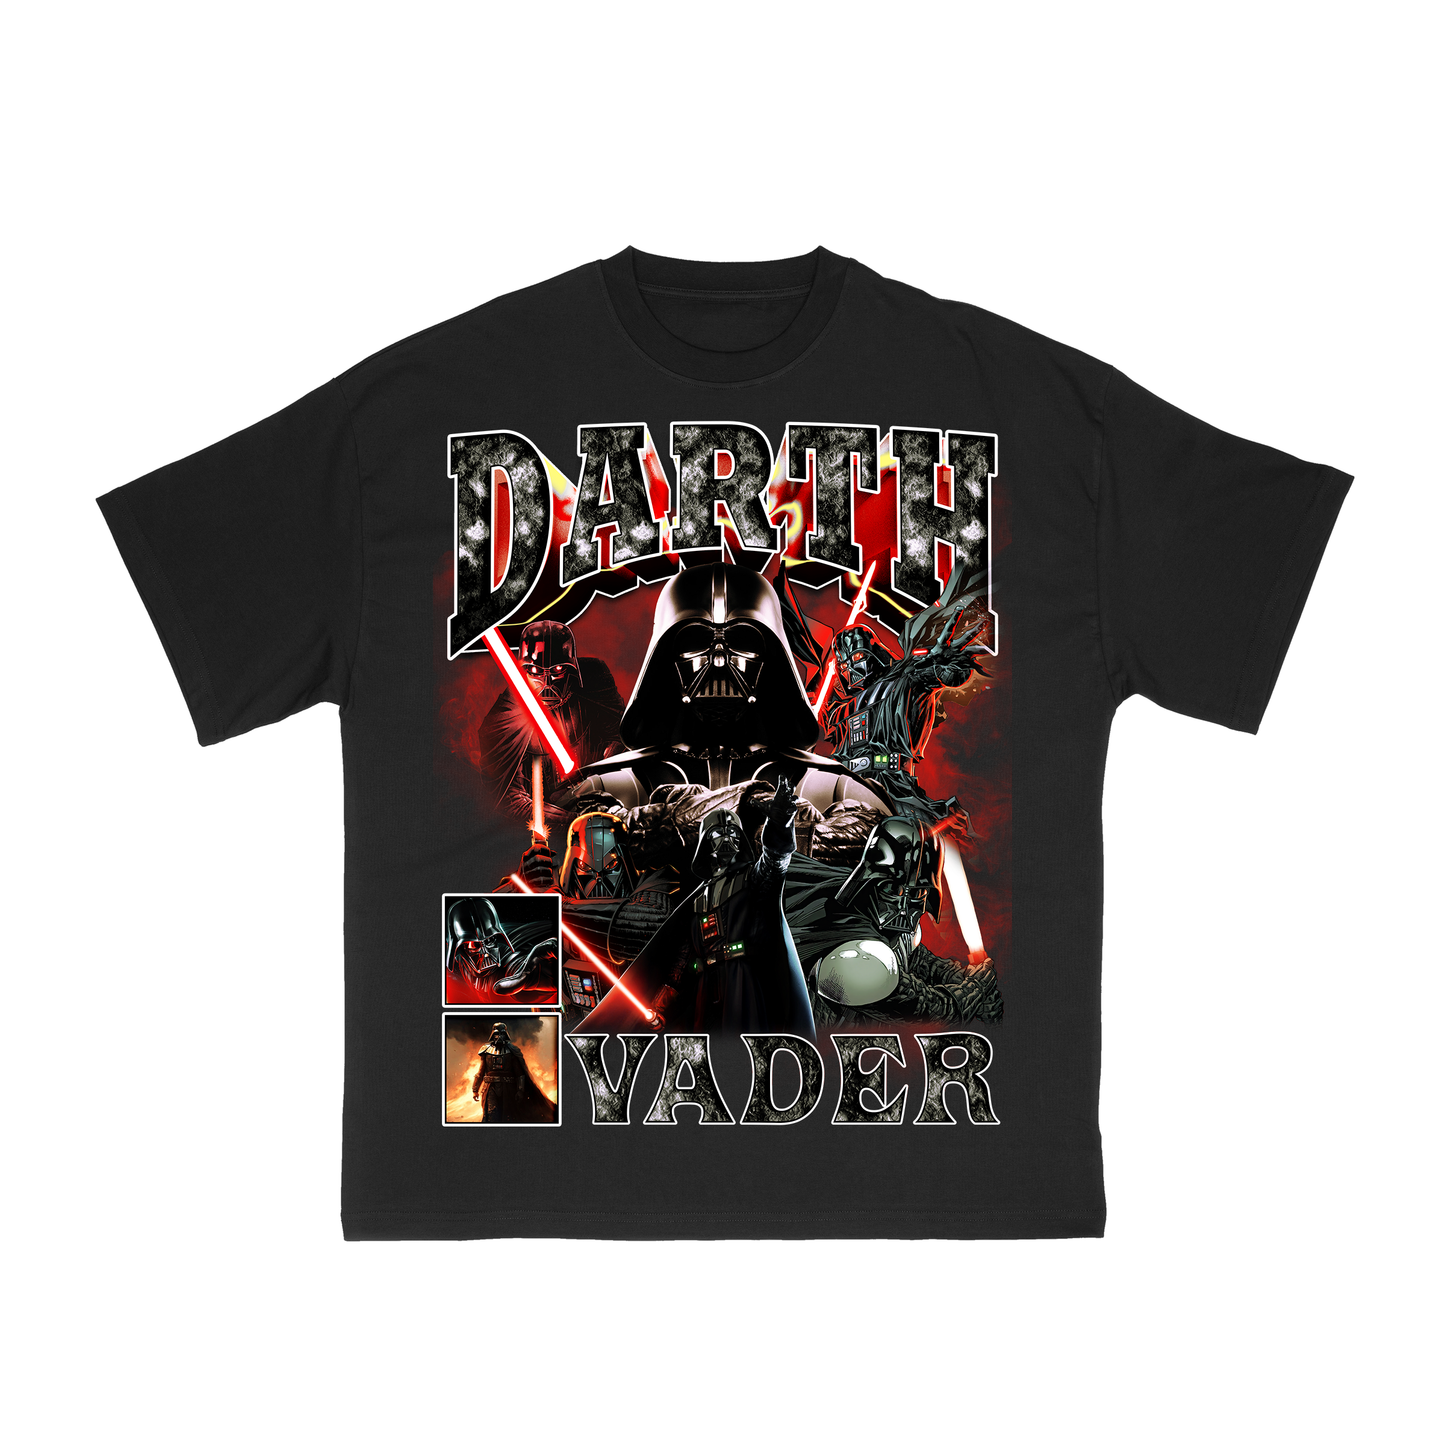 Darth Vader Tee